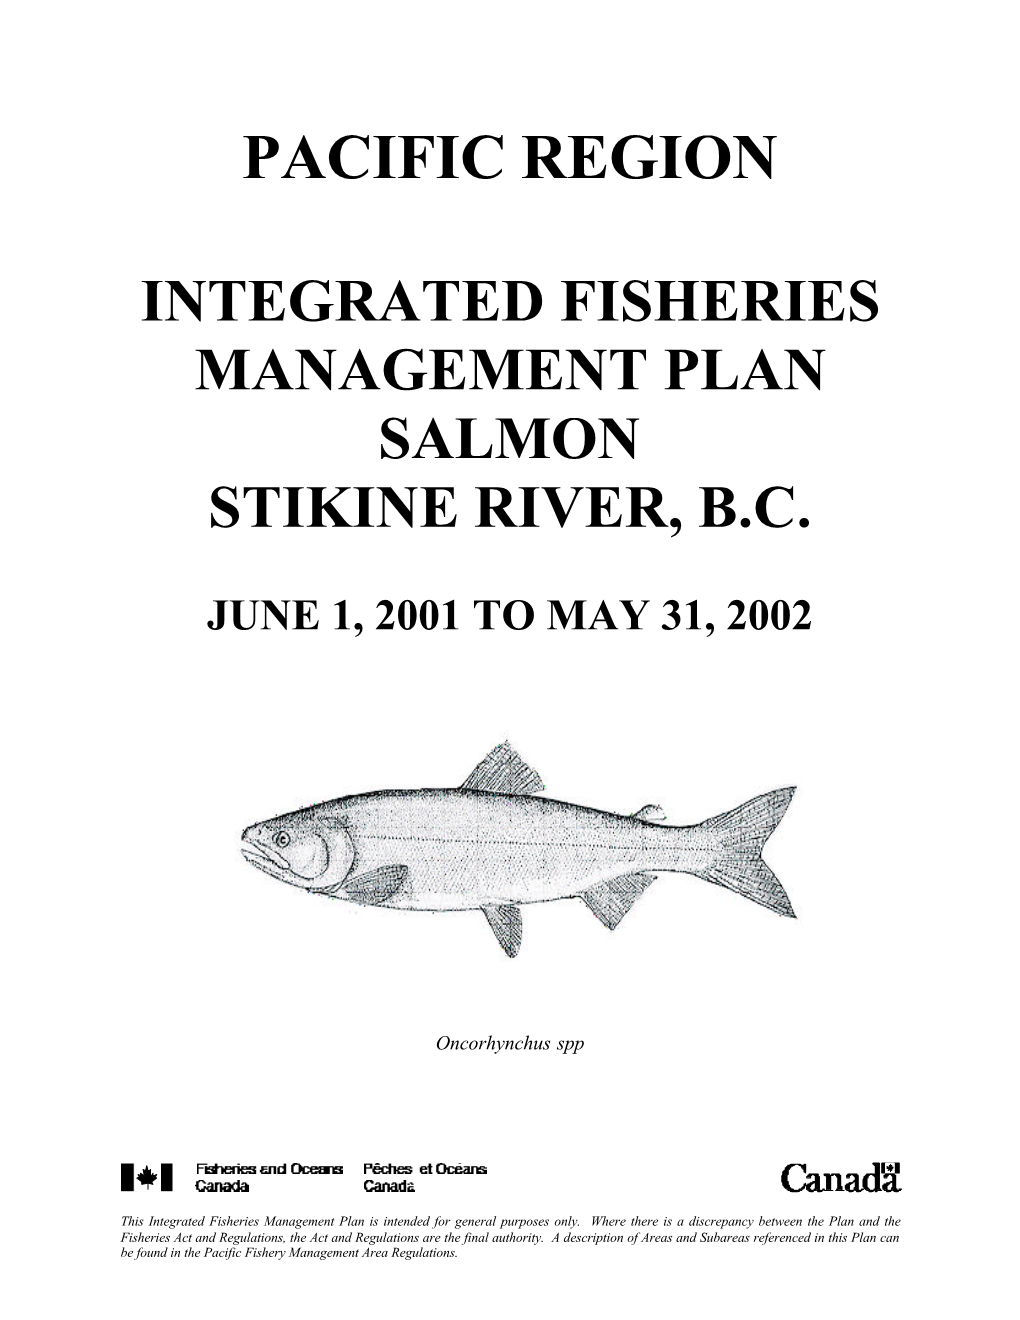 Pacific Region Integrated Fisheries Management Plan Salmon Stikine